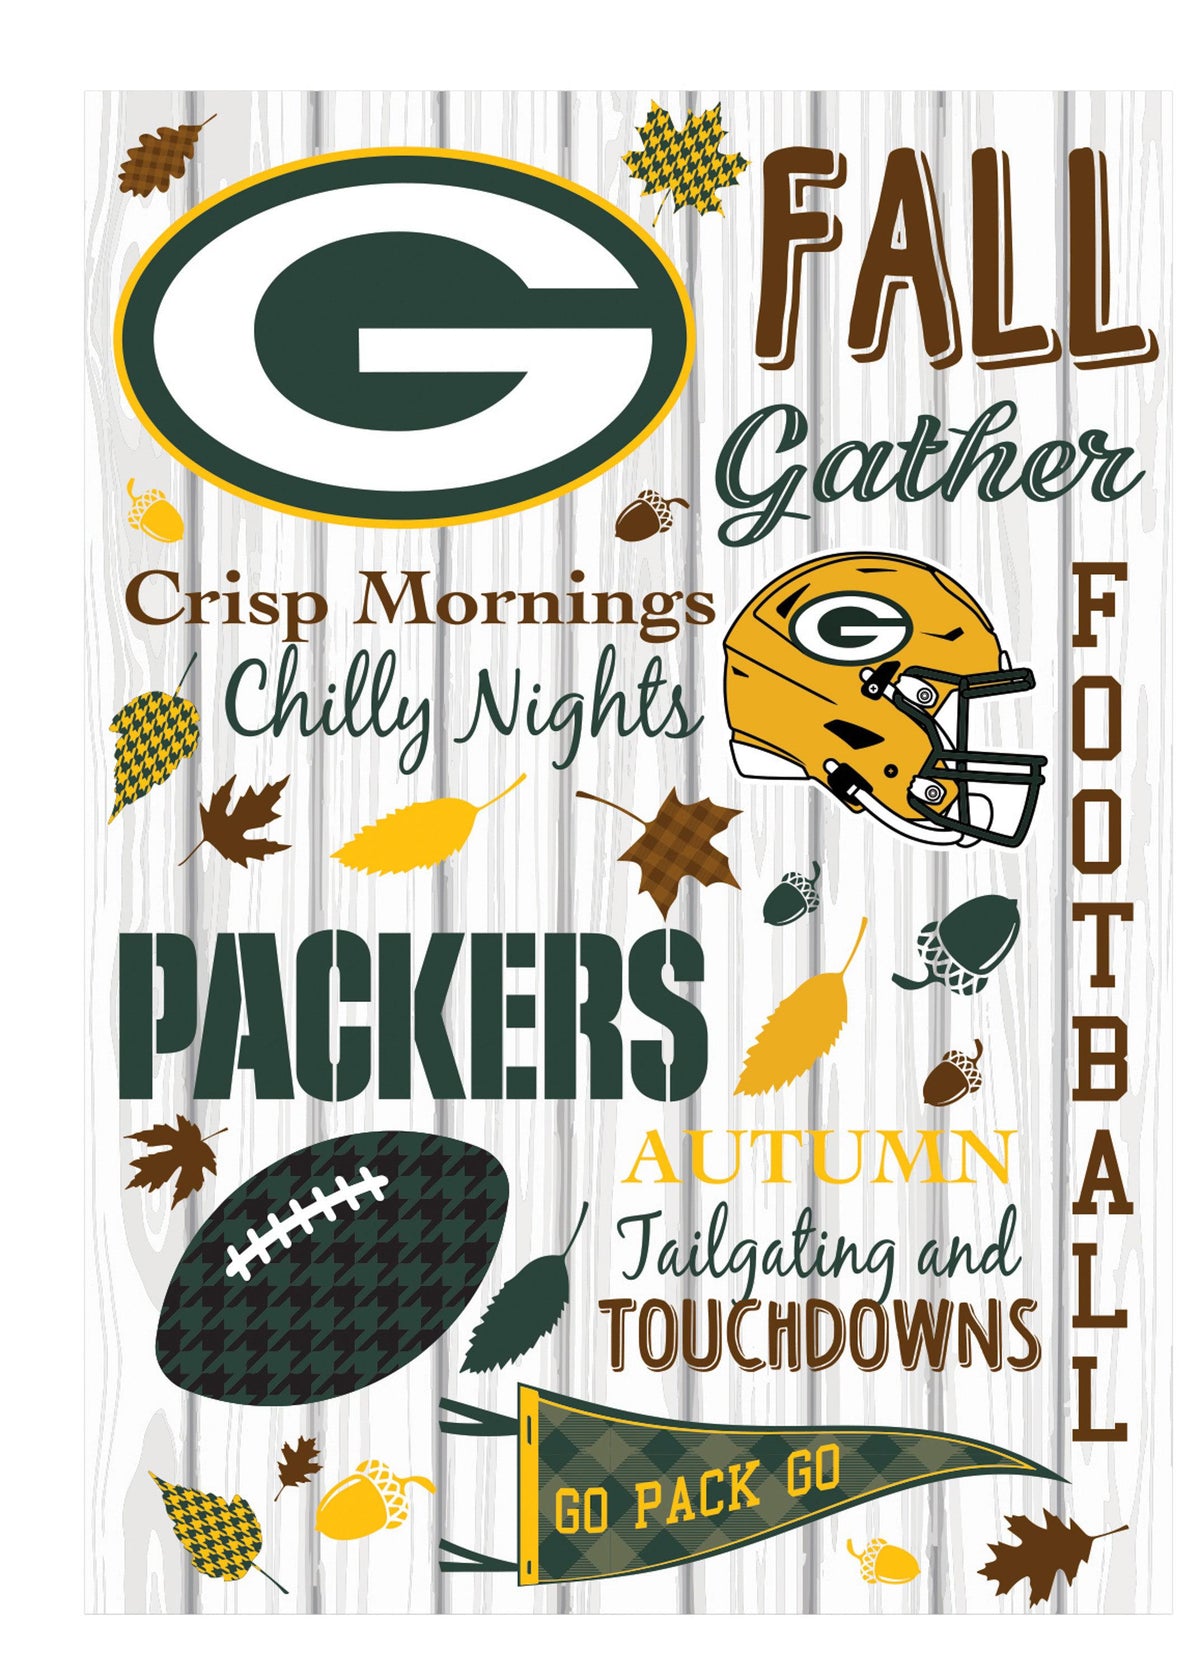 Green Bay Packers Autumn Garden Flag-Garden Flag-Fly Me Flag